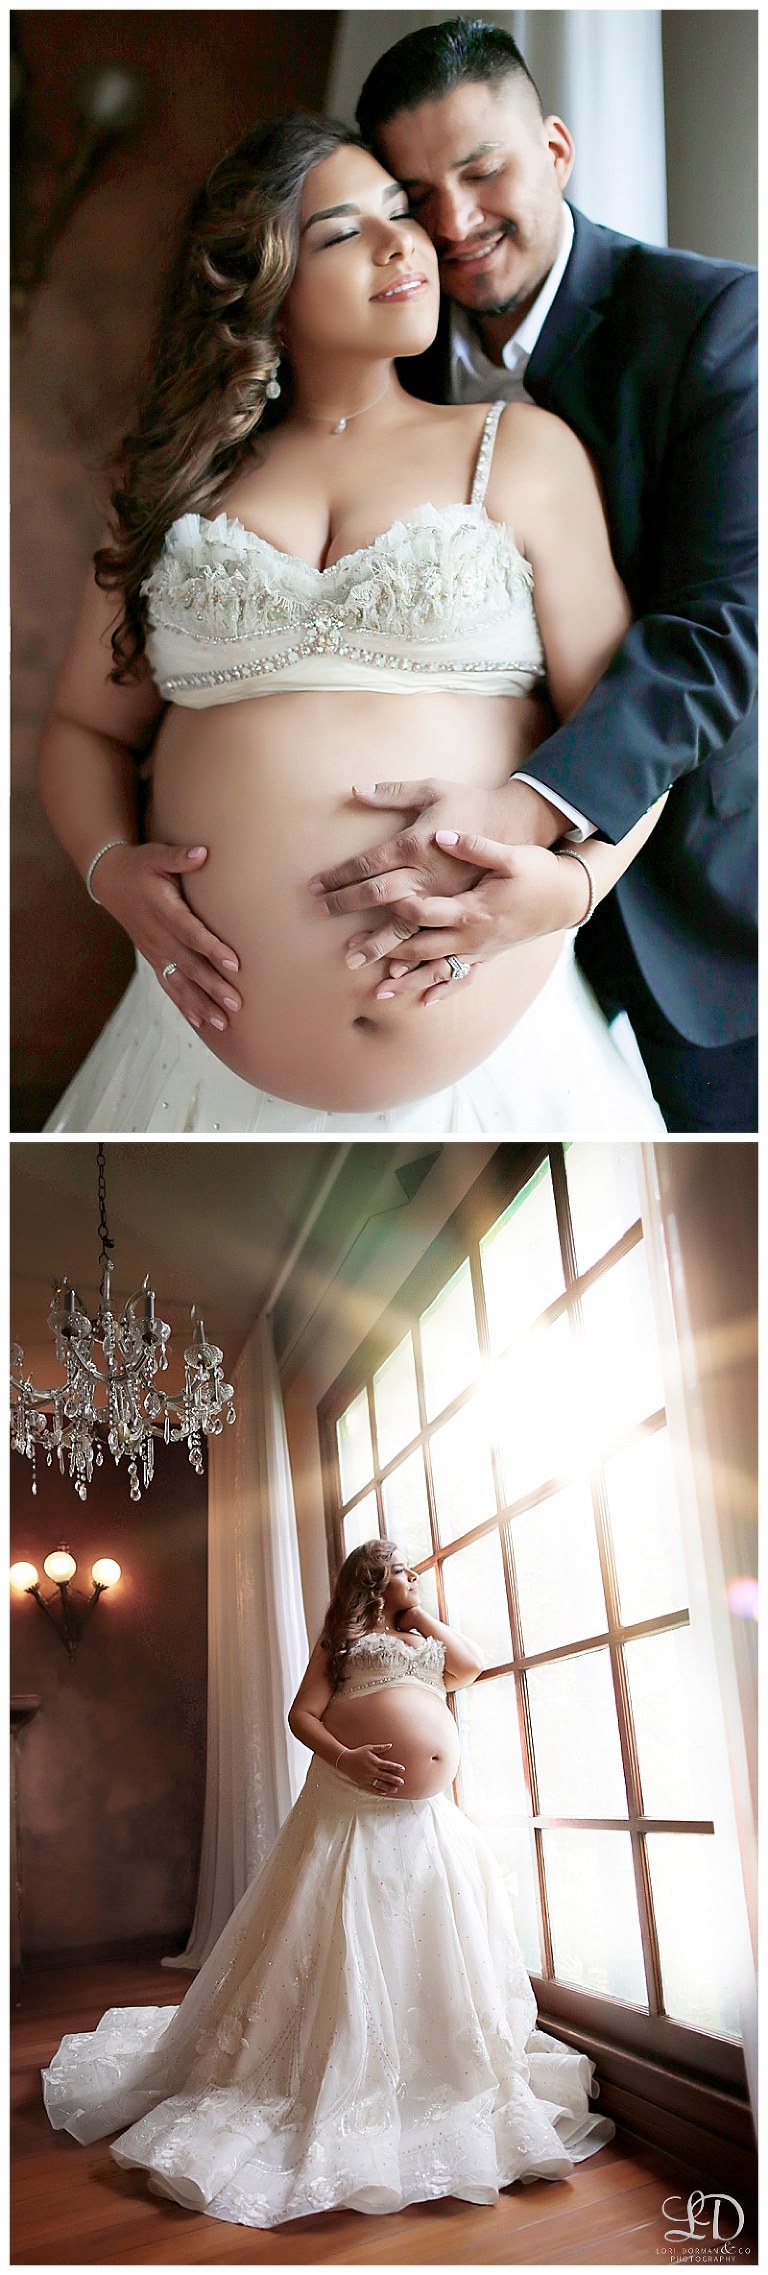 sweet maternity photoshoot-lori dorman photography-maternity boudoir-professional photographer_5237.jpg